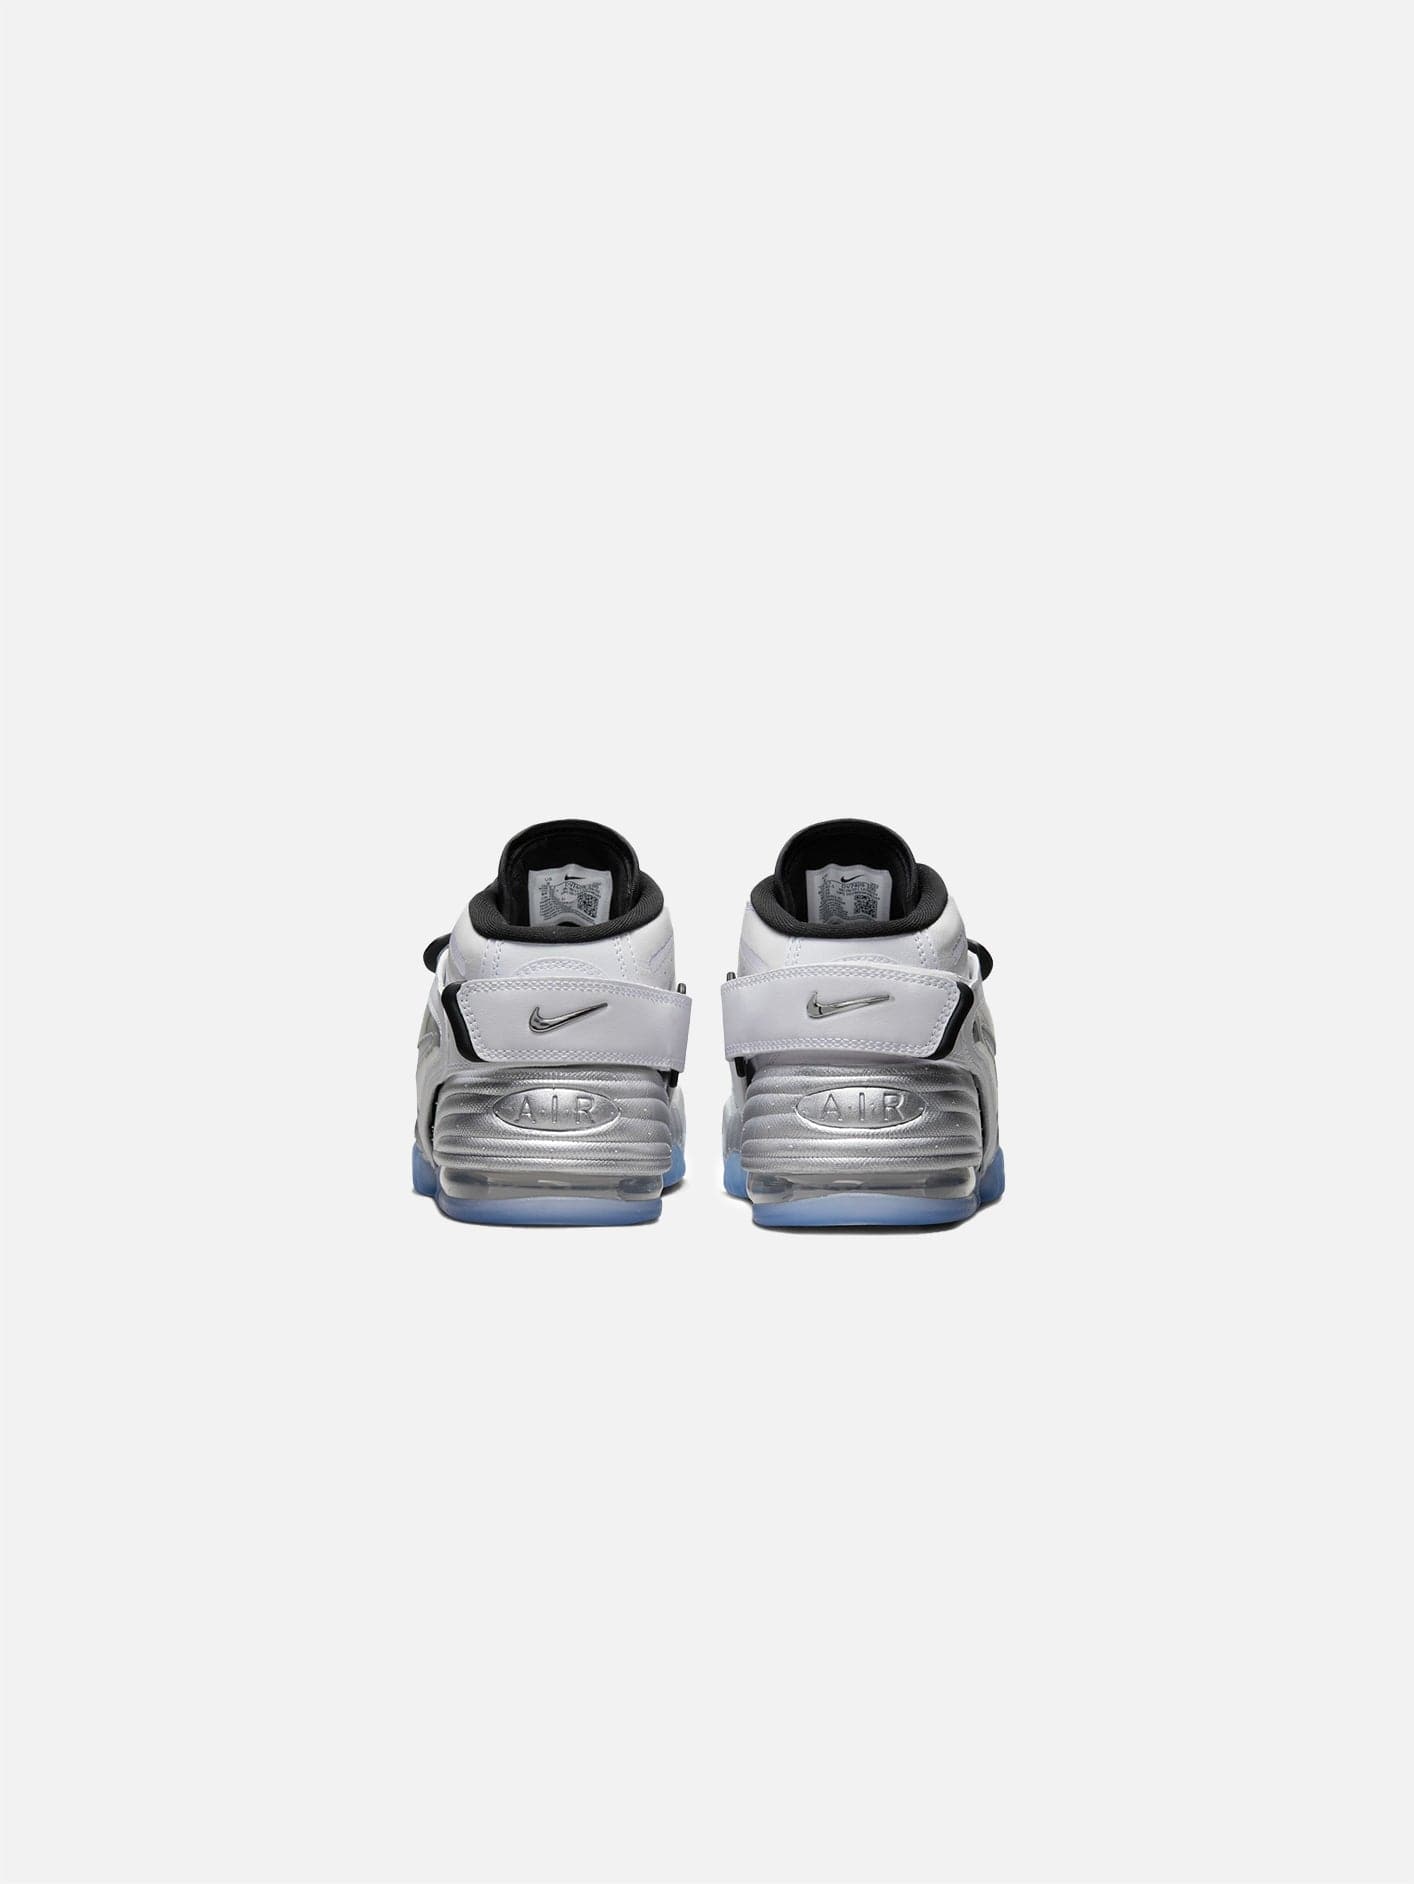 Nike Air Adjust Force Vast Grey Metallic Silver (Women's)